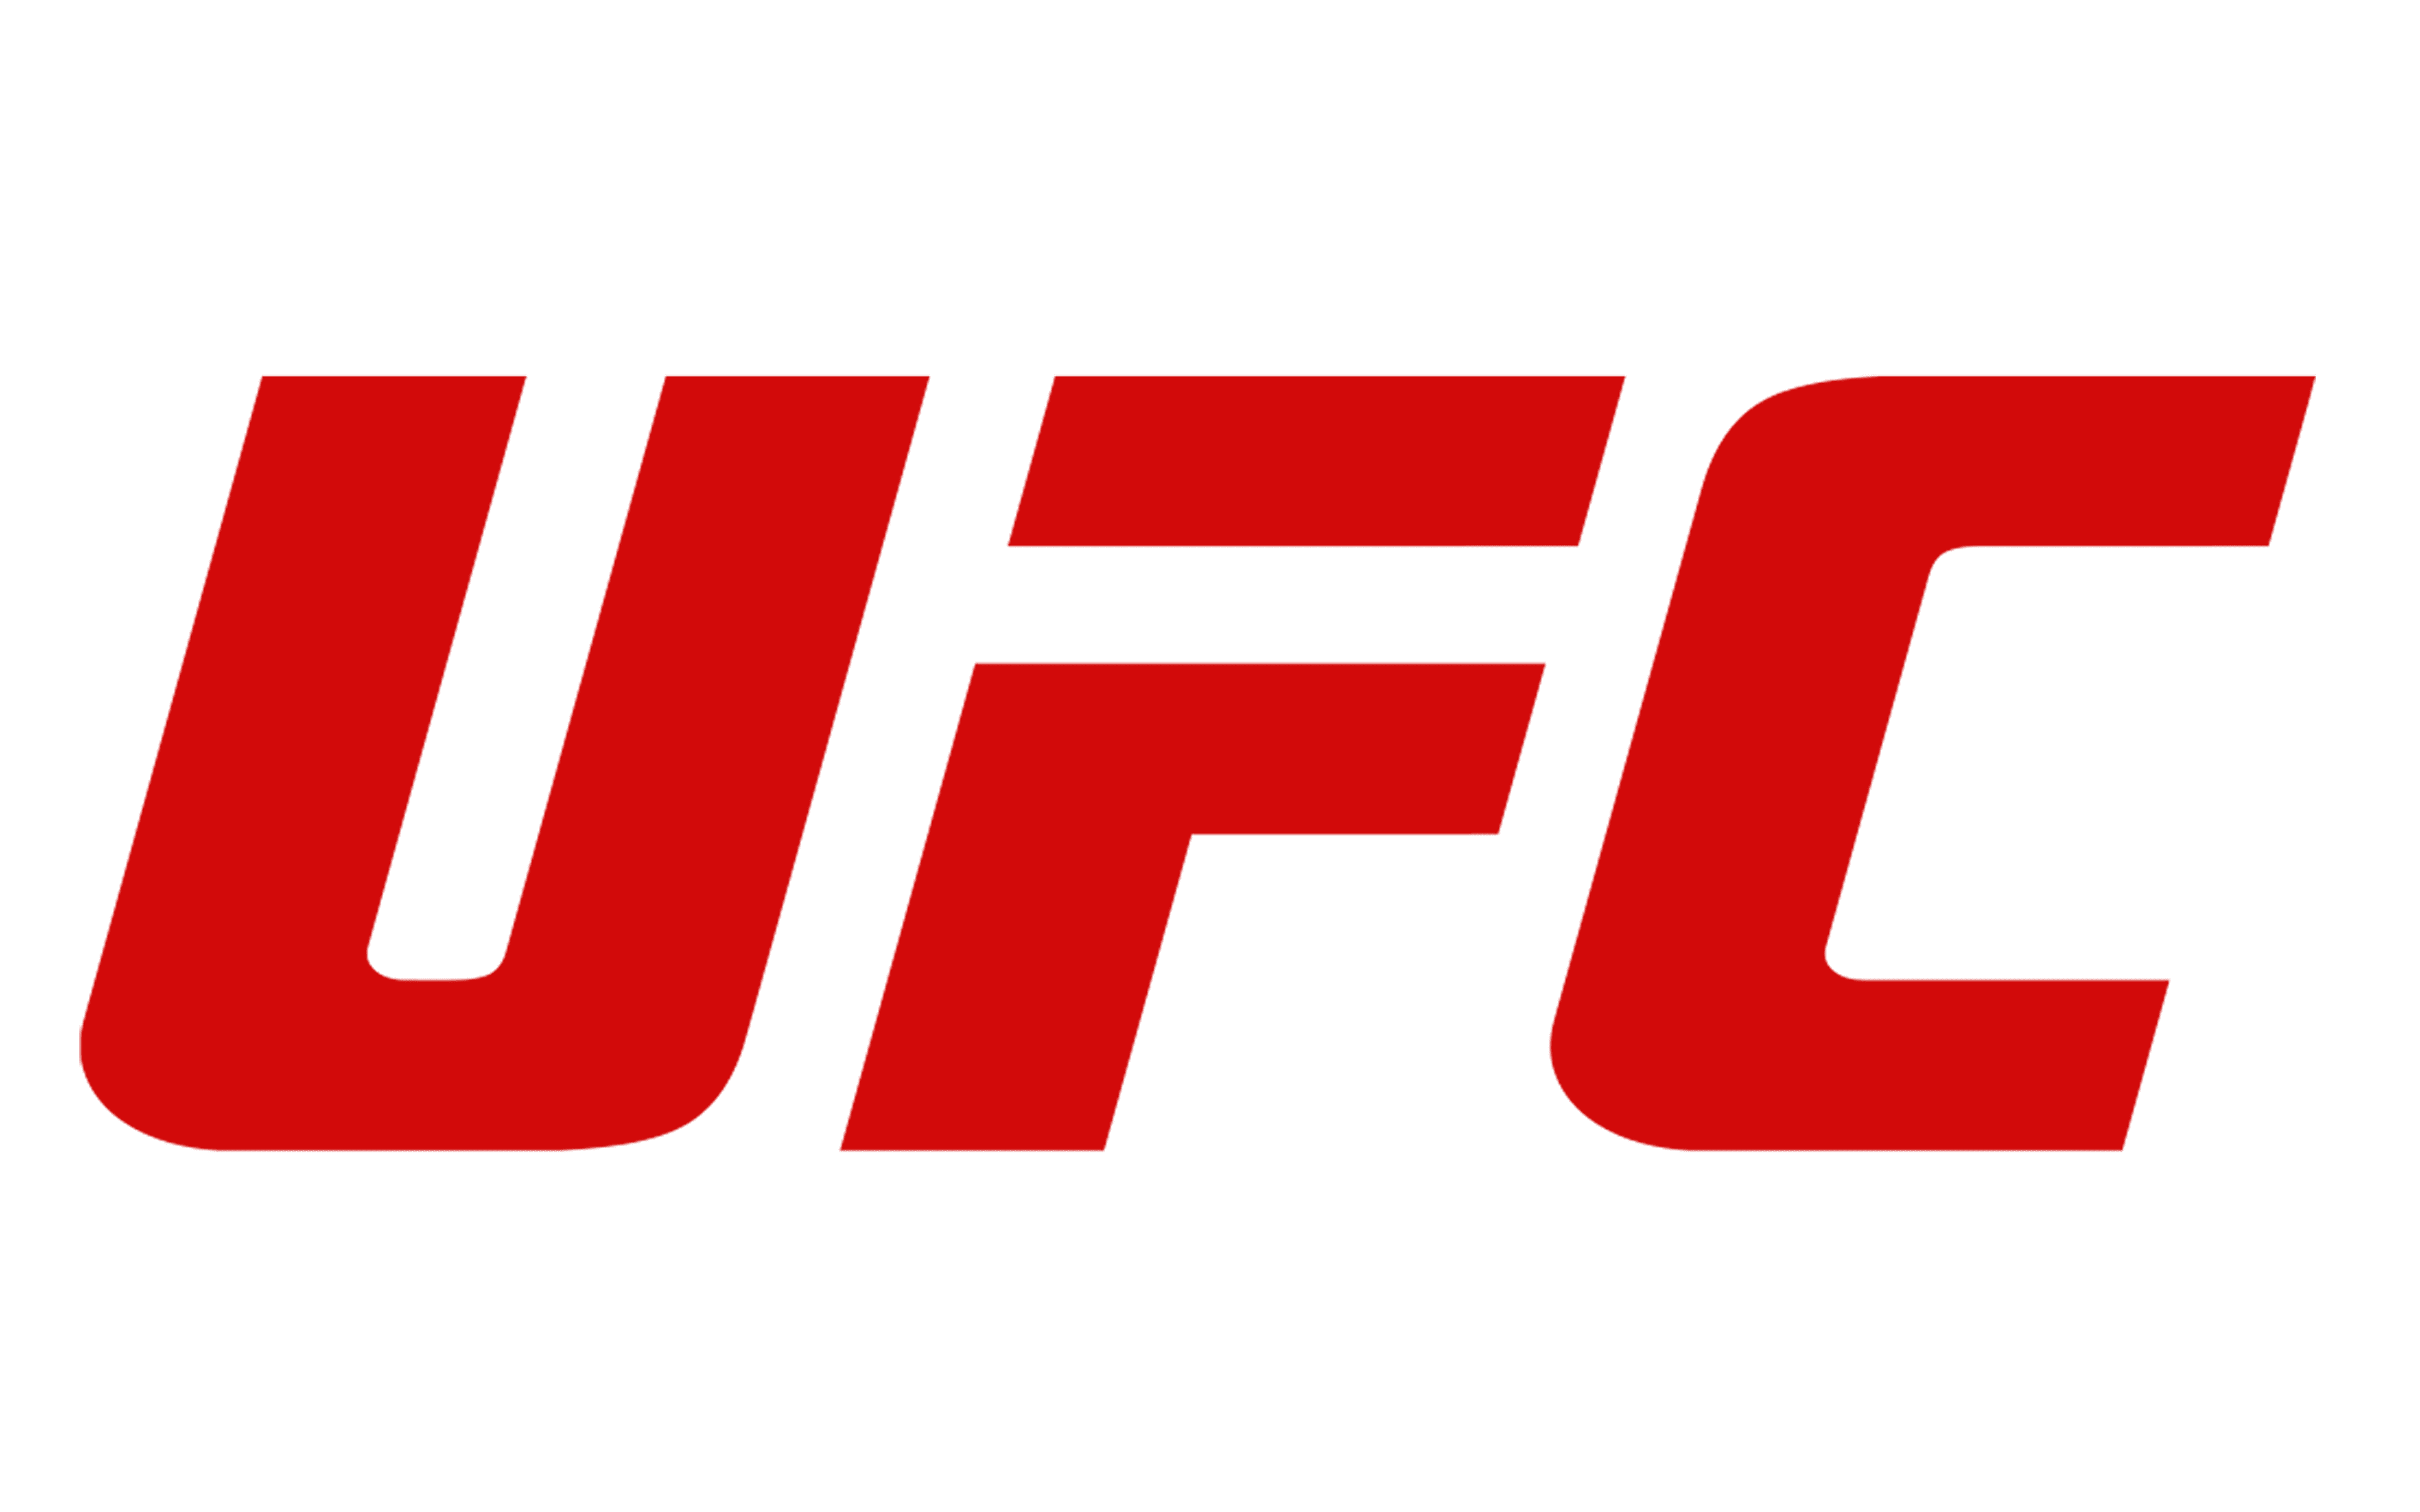 Watch: UFC 145-pound title changes hands on a KO